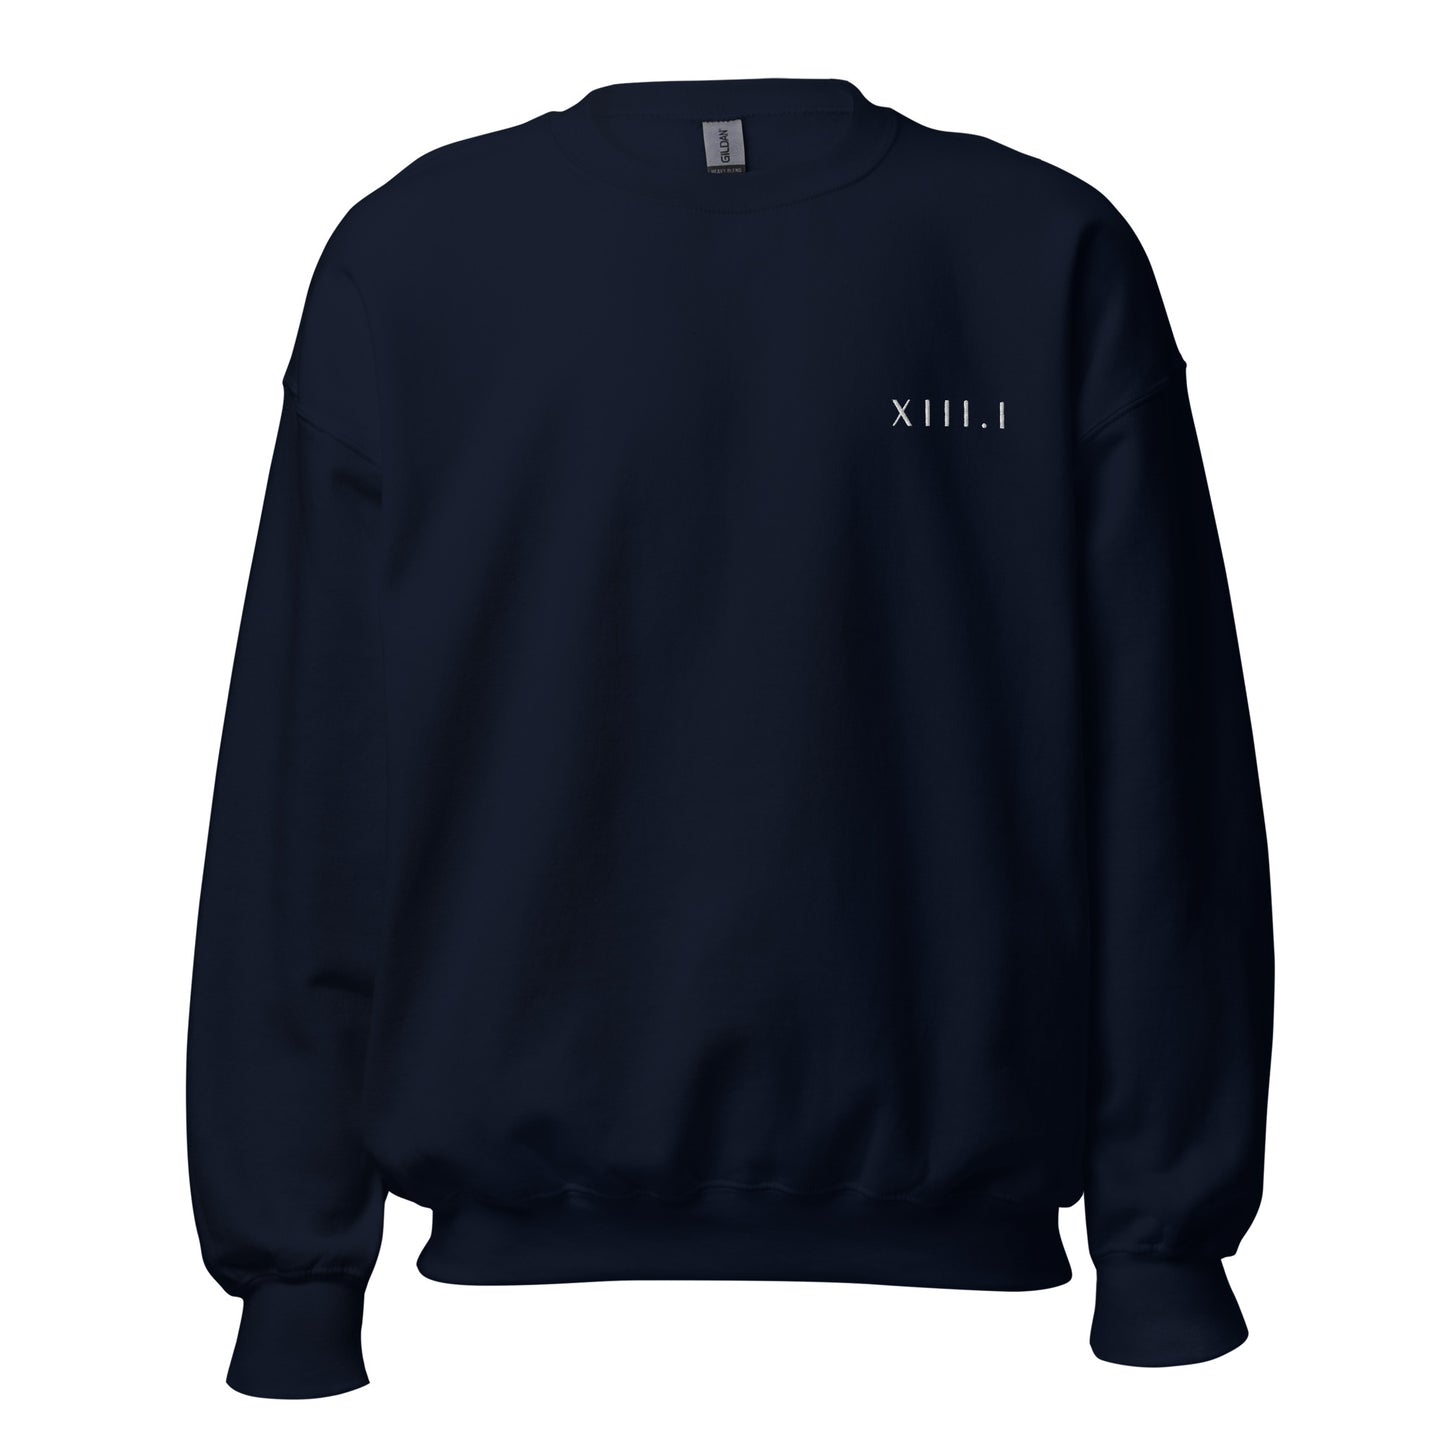 navy unisex sweatshirt with XIII.I 13.1 half marathon in roman numerals embroidered in white writing